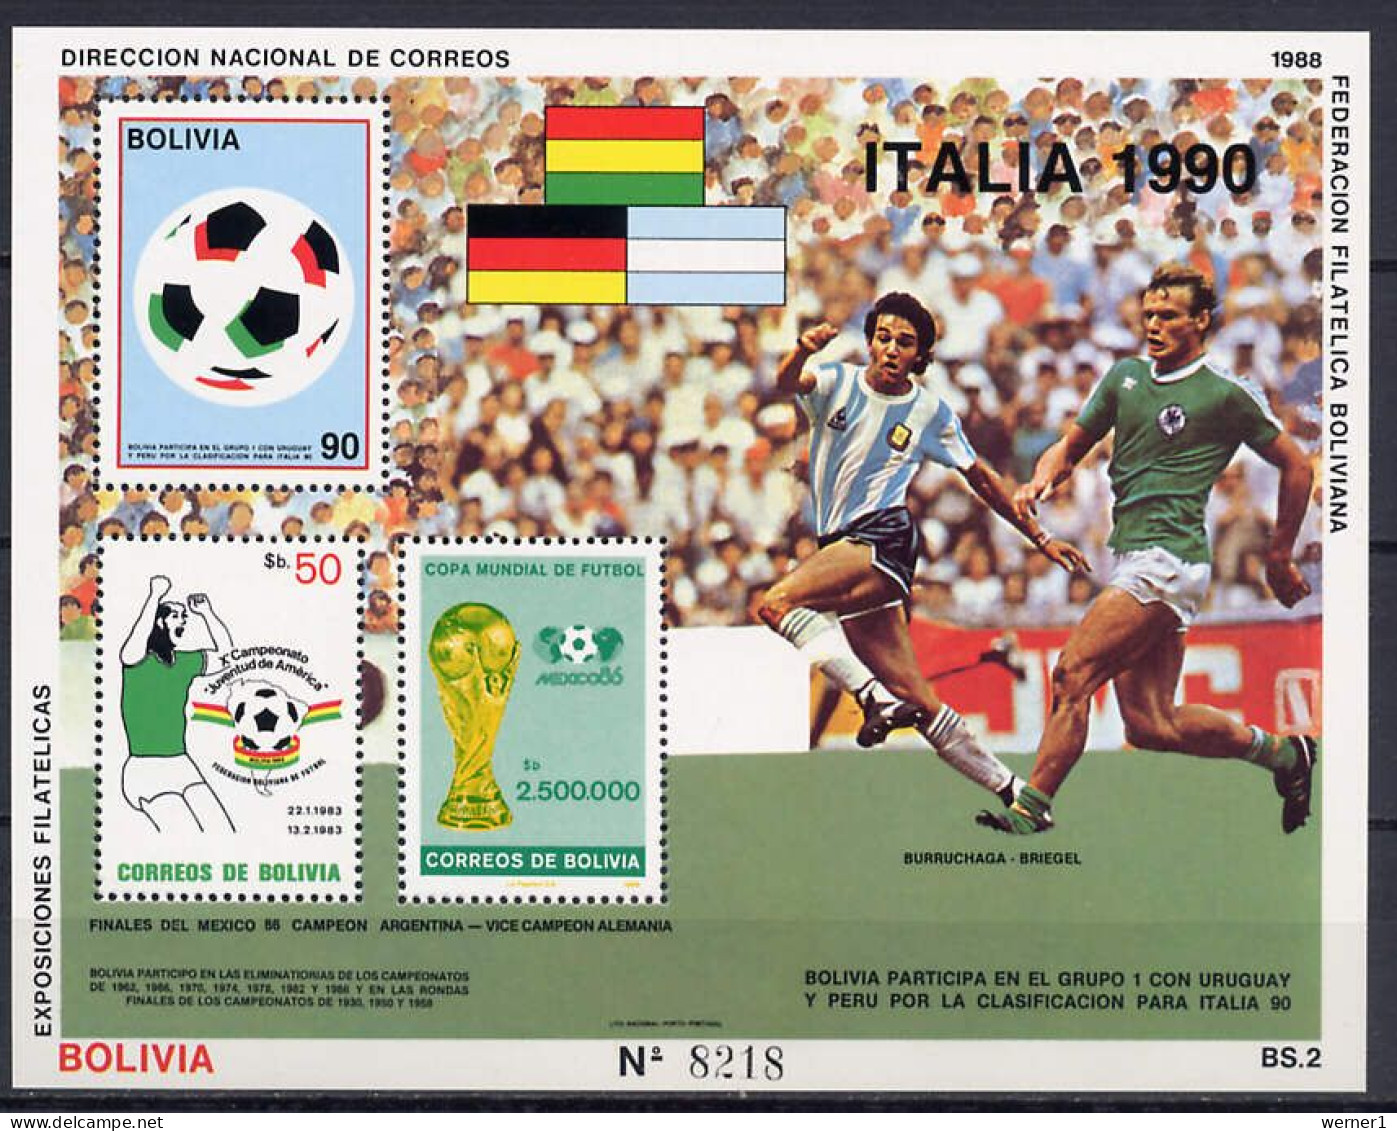 Bolivia 1988 Football Soccer World Cup S/s MNH - 1990 – Italy